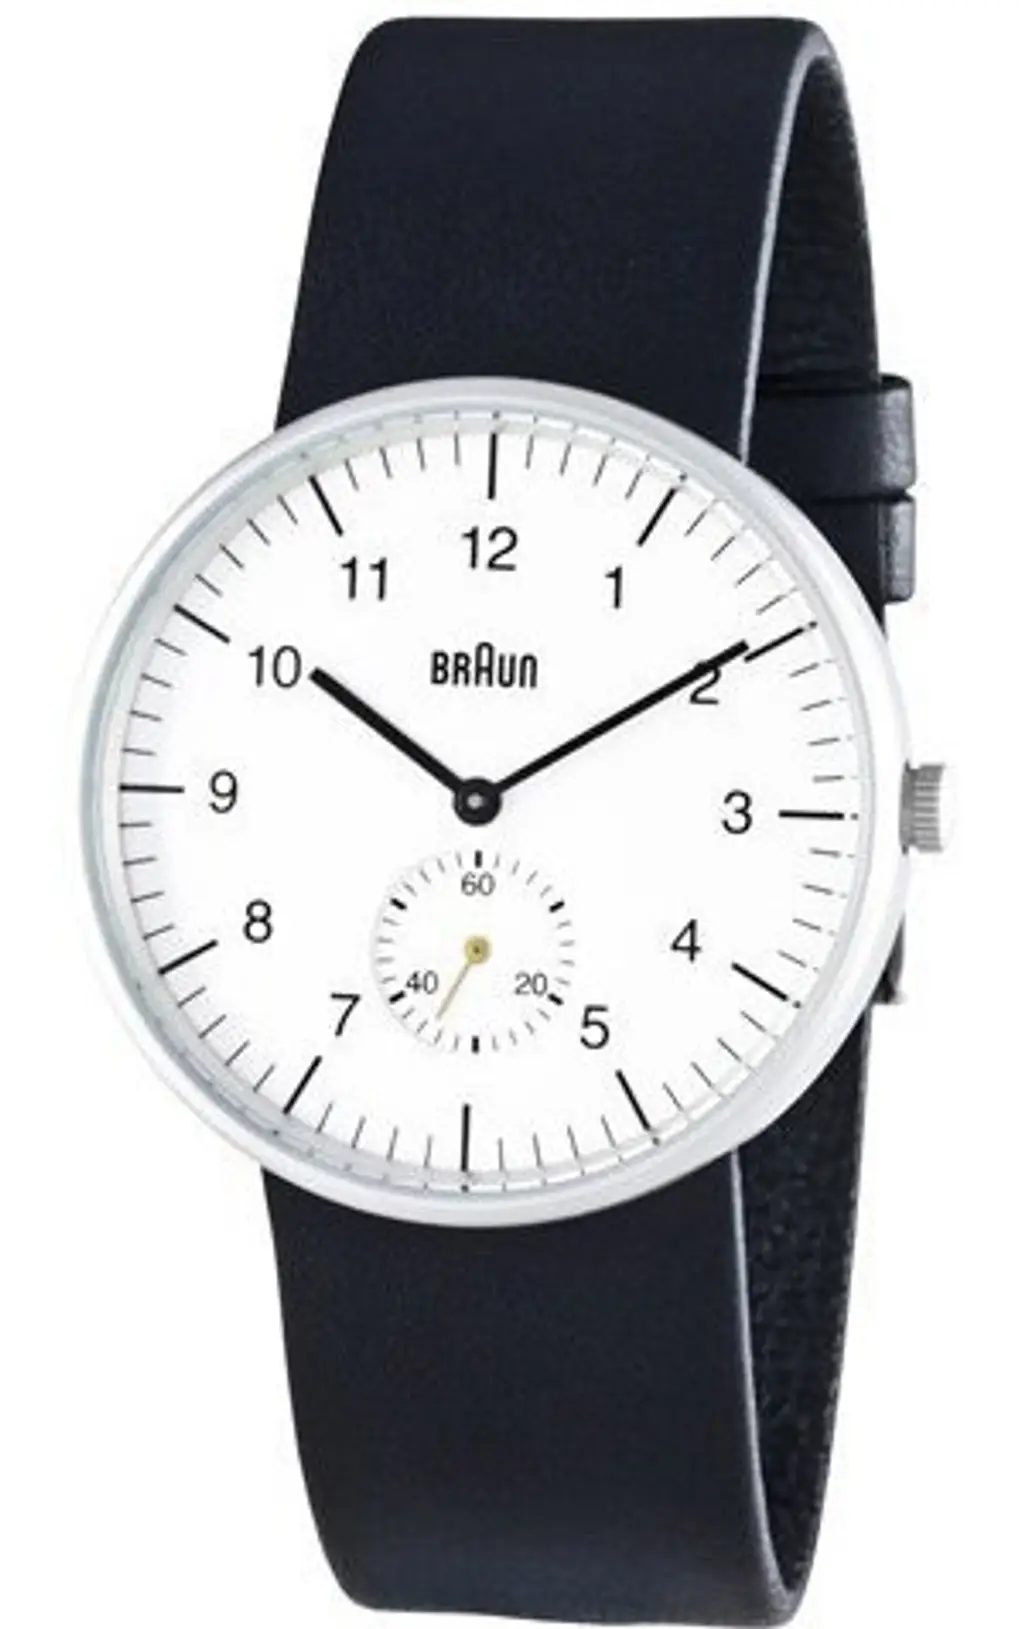 Men's Analog Wrist Watch, White Face 38 Mm